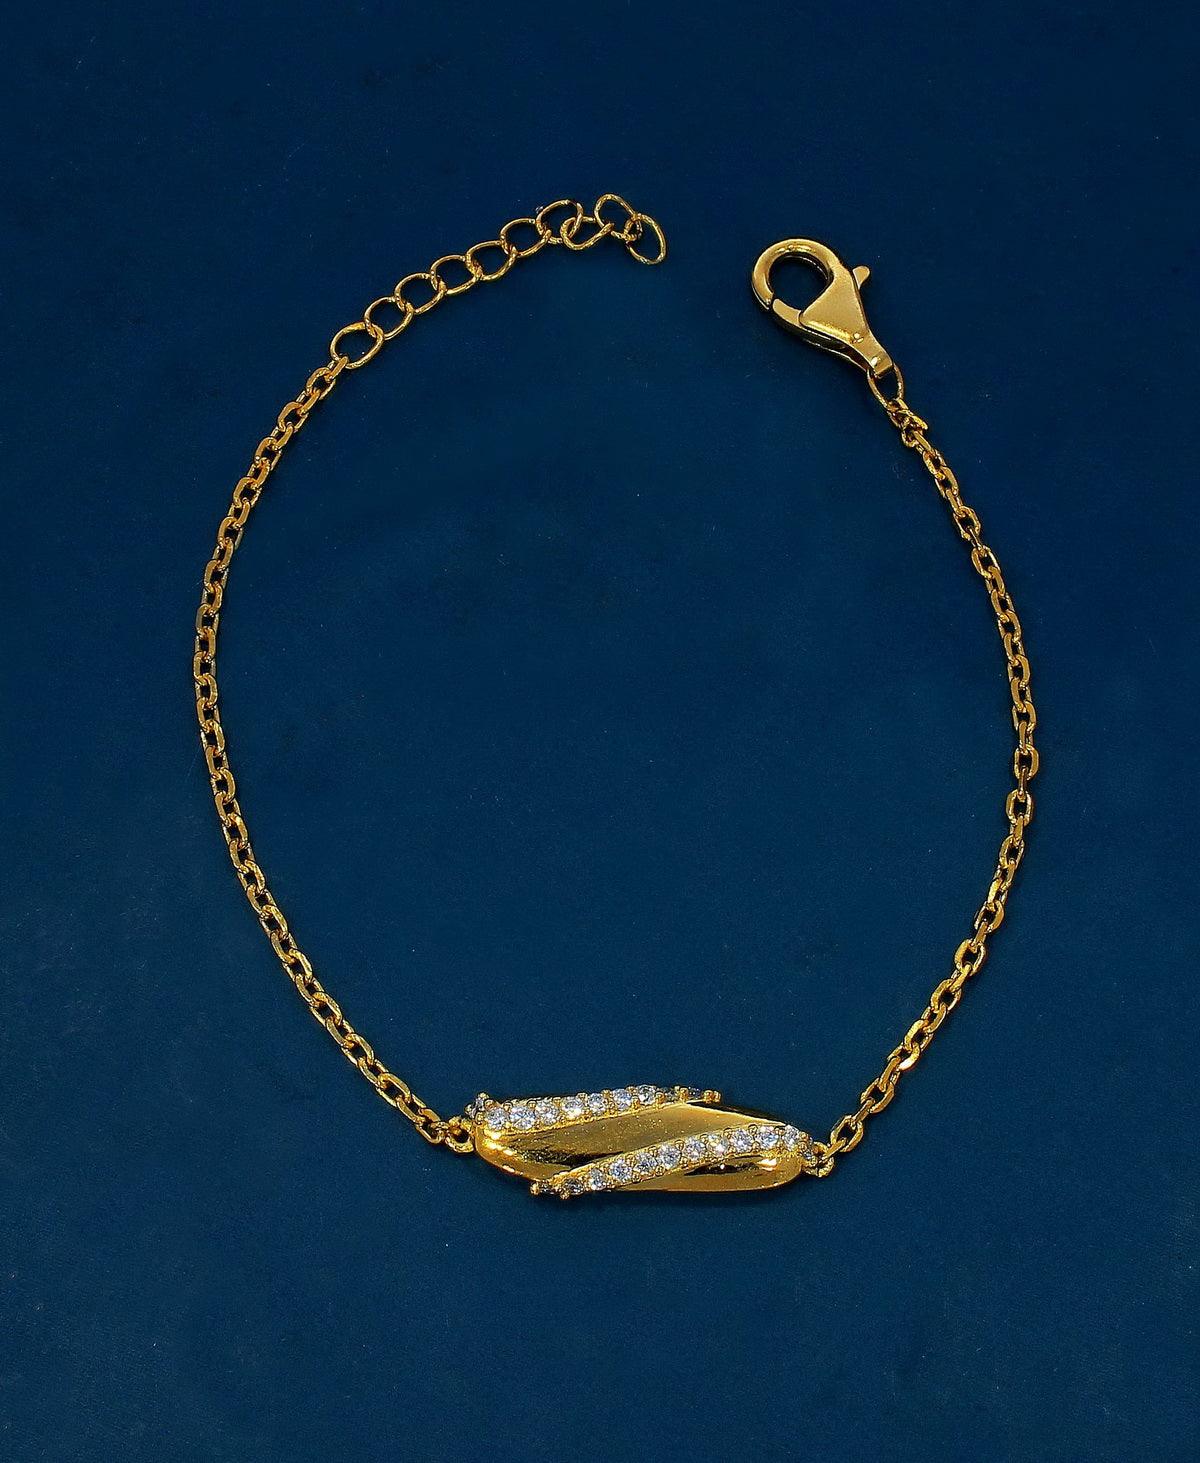 Trendy Stone Studded Bracelet - Chandrani Pearls